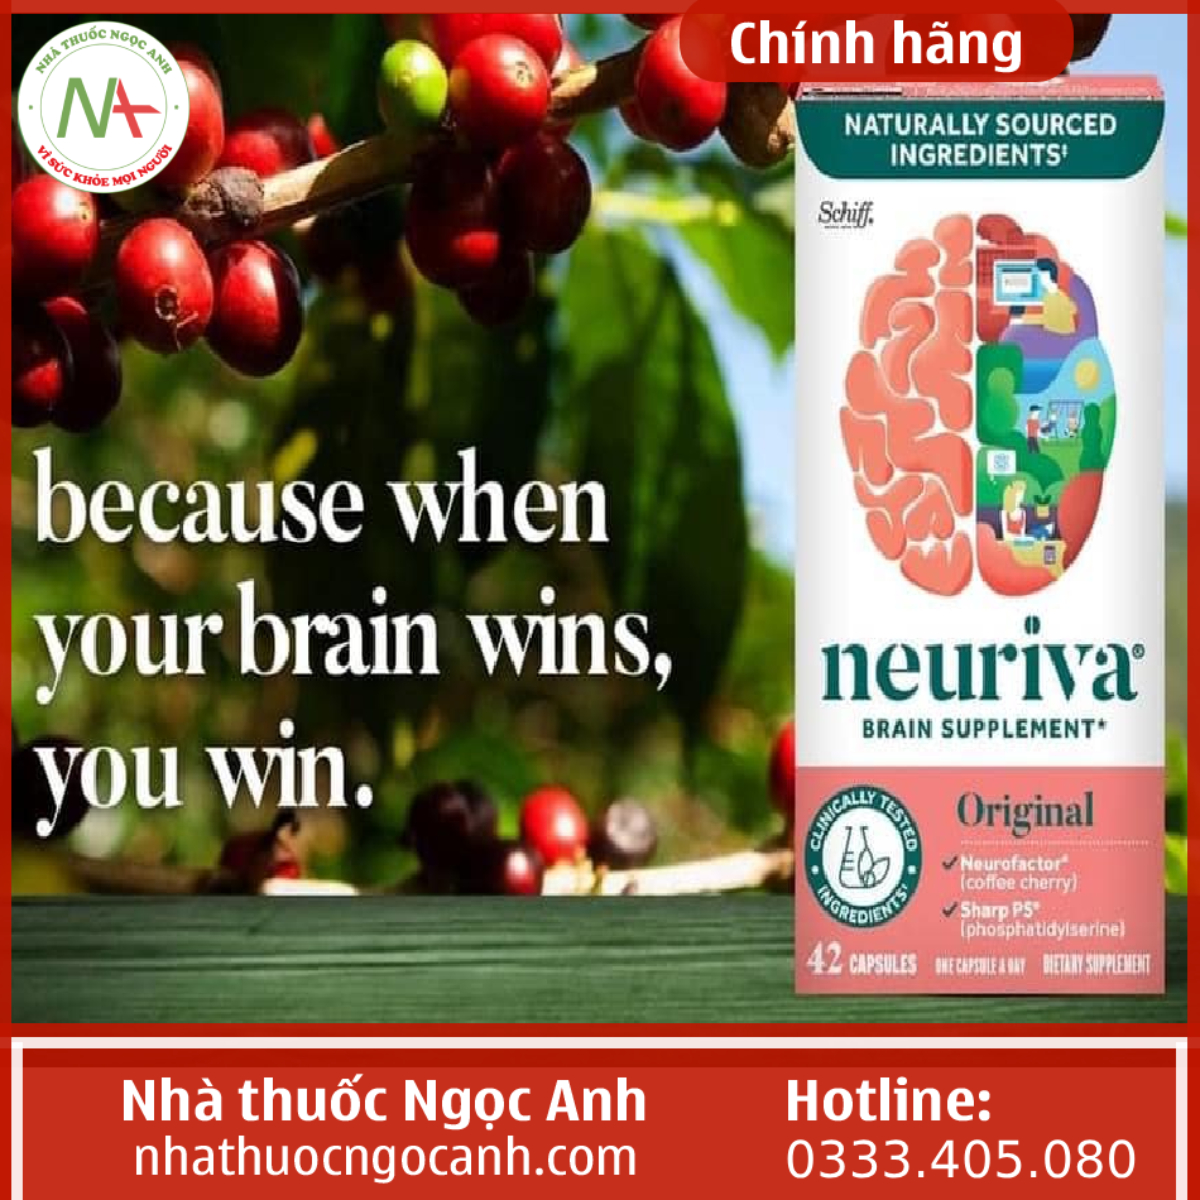 Neuriva Brain Supplement Original